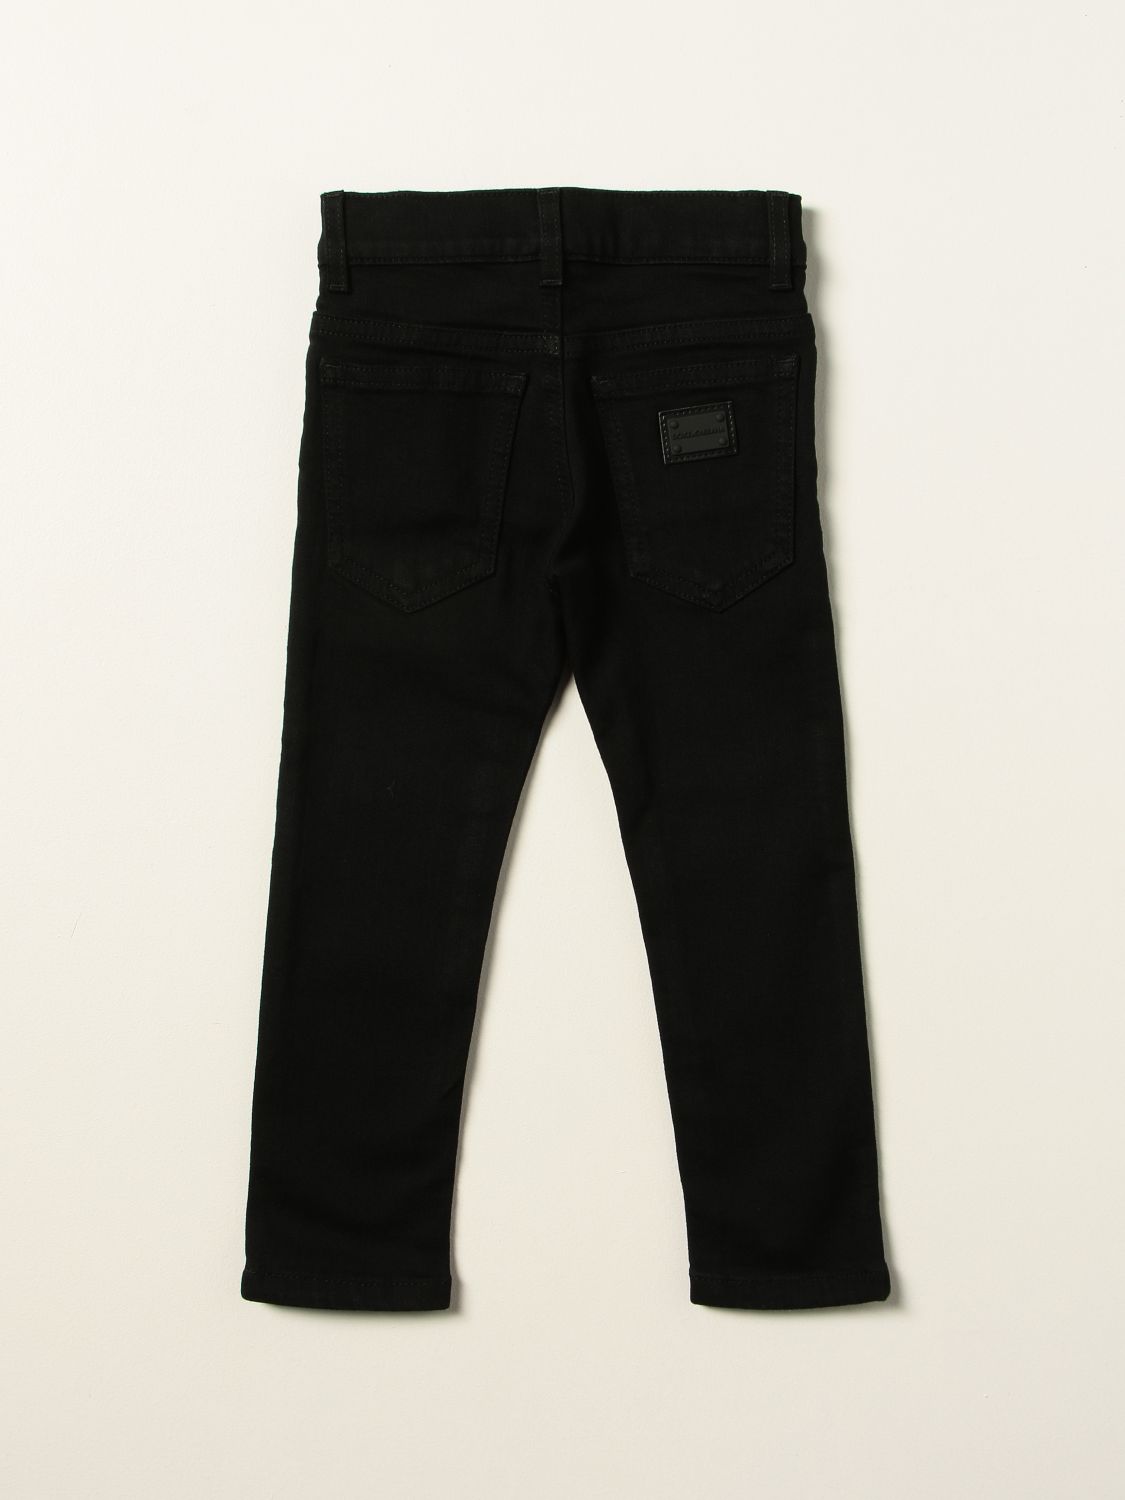 DOLCE & GABBANA: 5-pocket jeans - Black | Dolce & Gabbana jeans L42F40  LD862 online on 